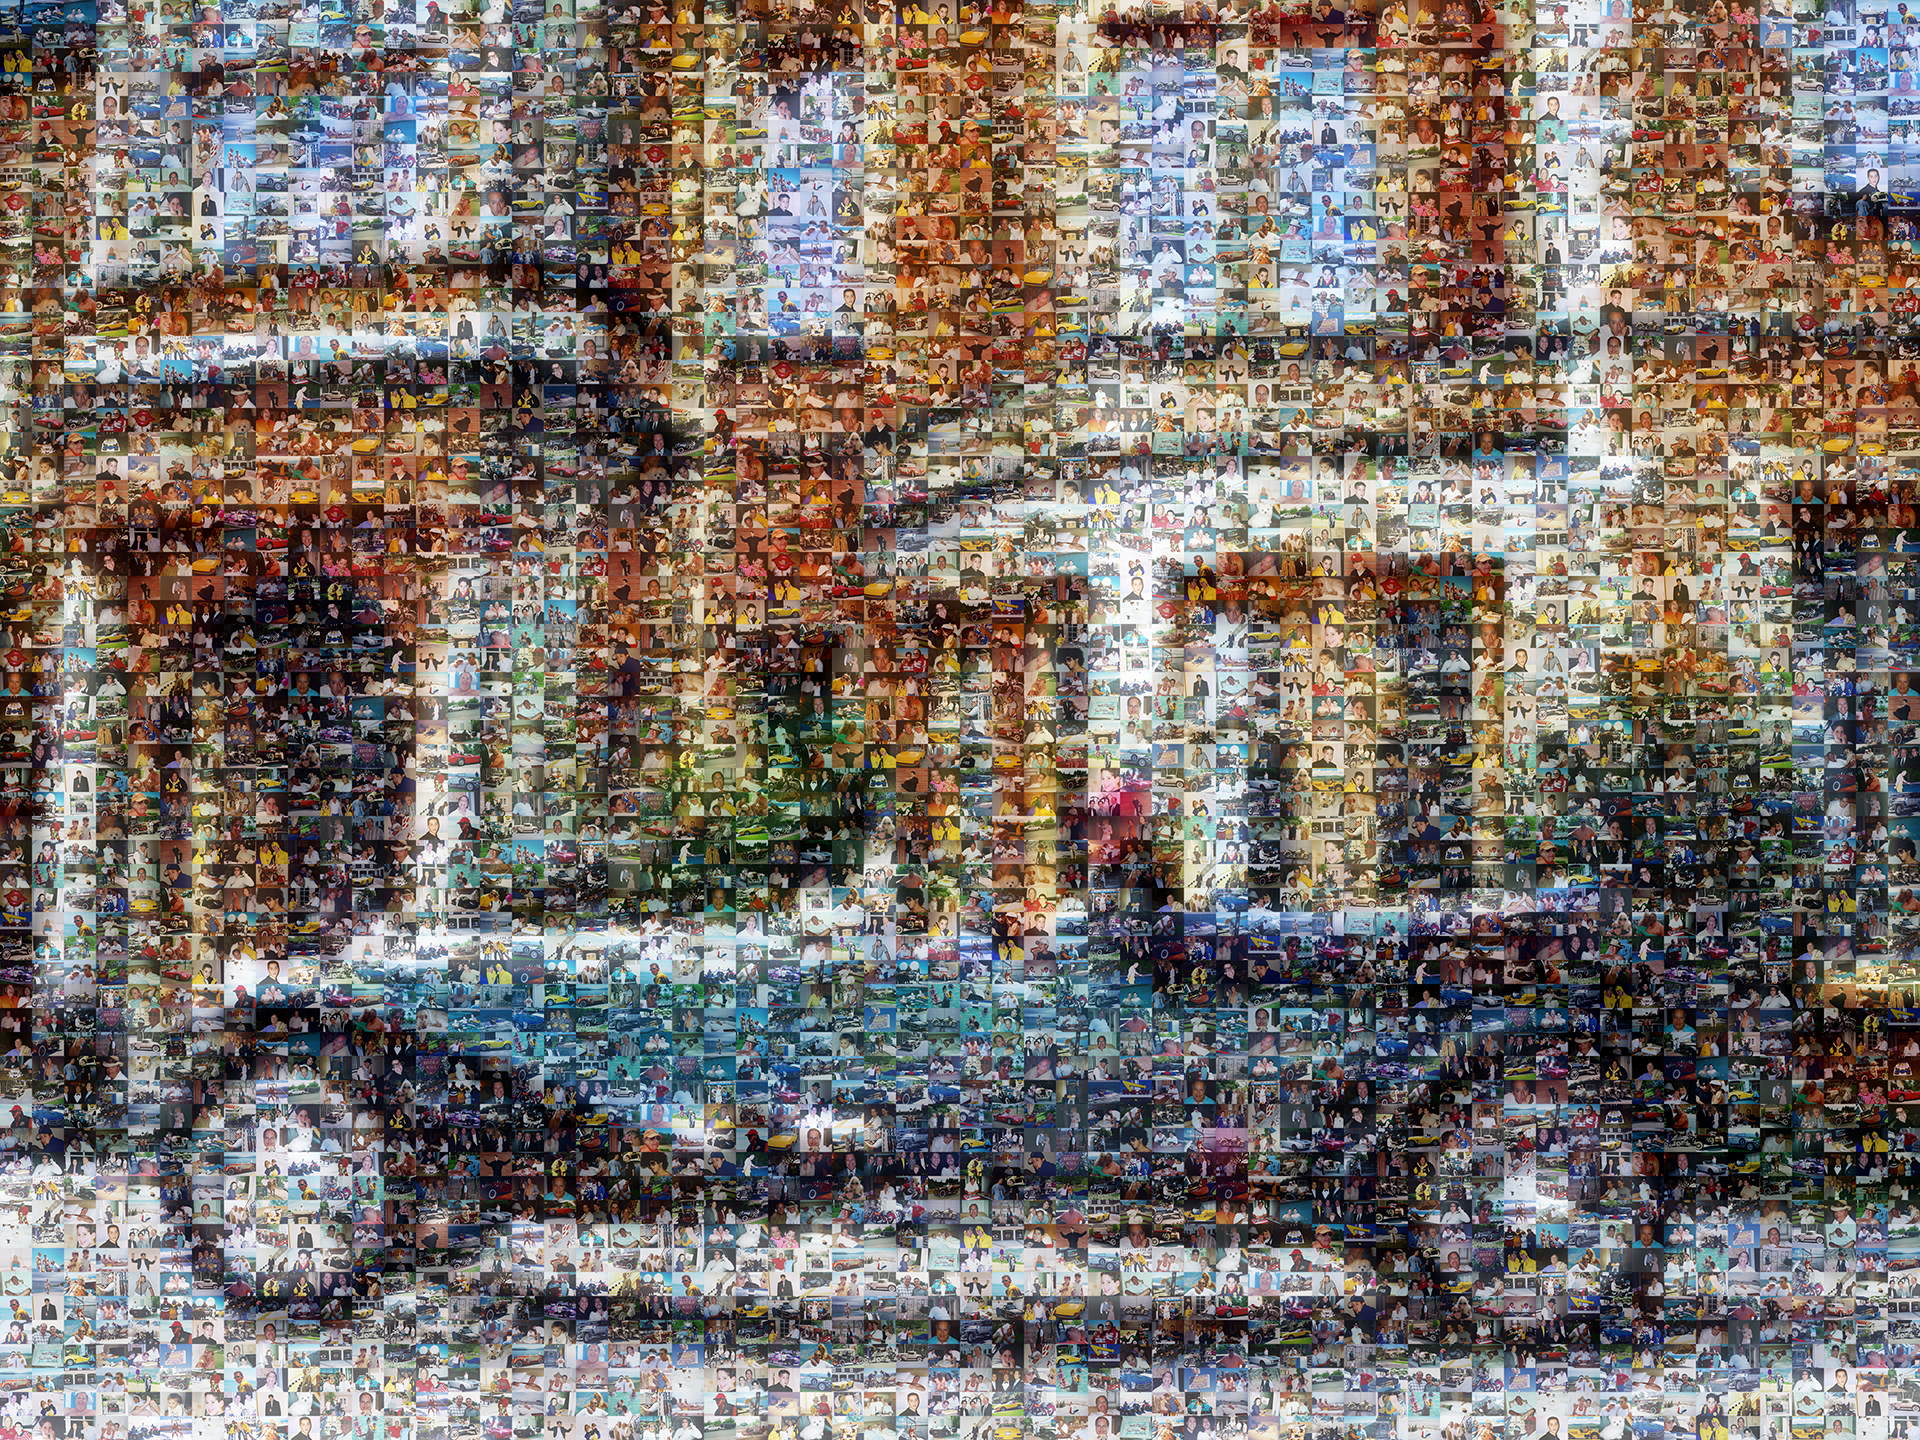 photo mosaic created using 308 family taken photos